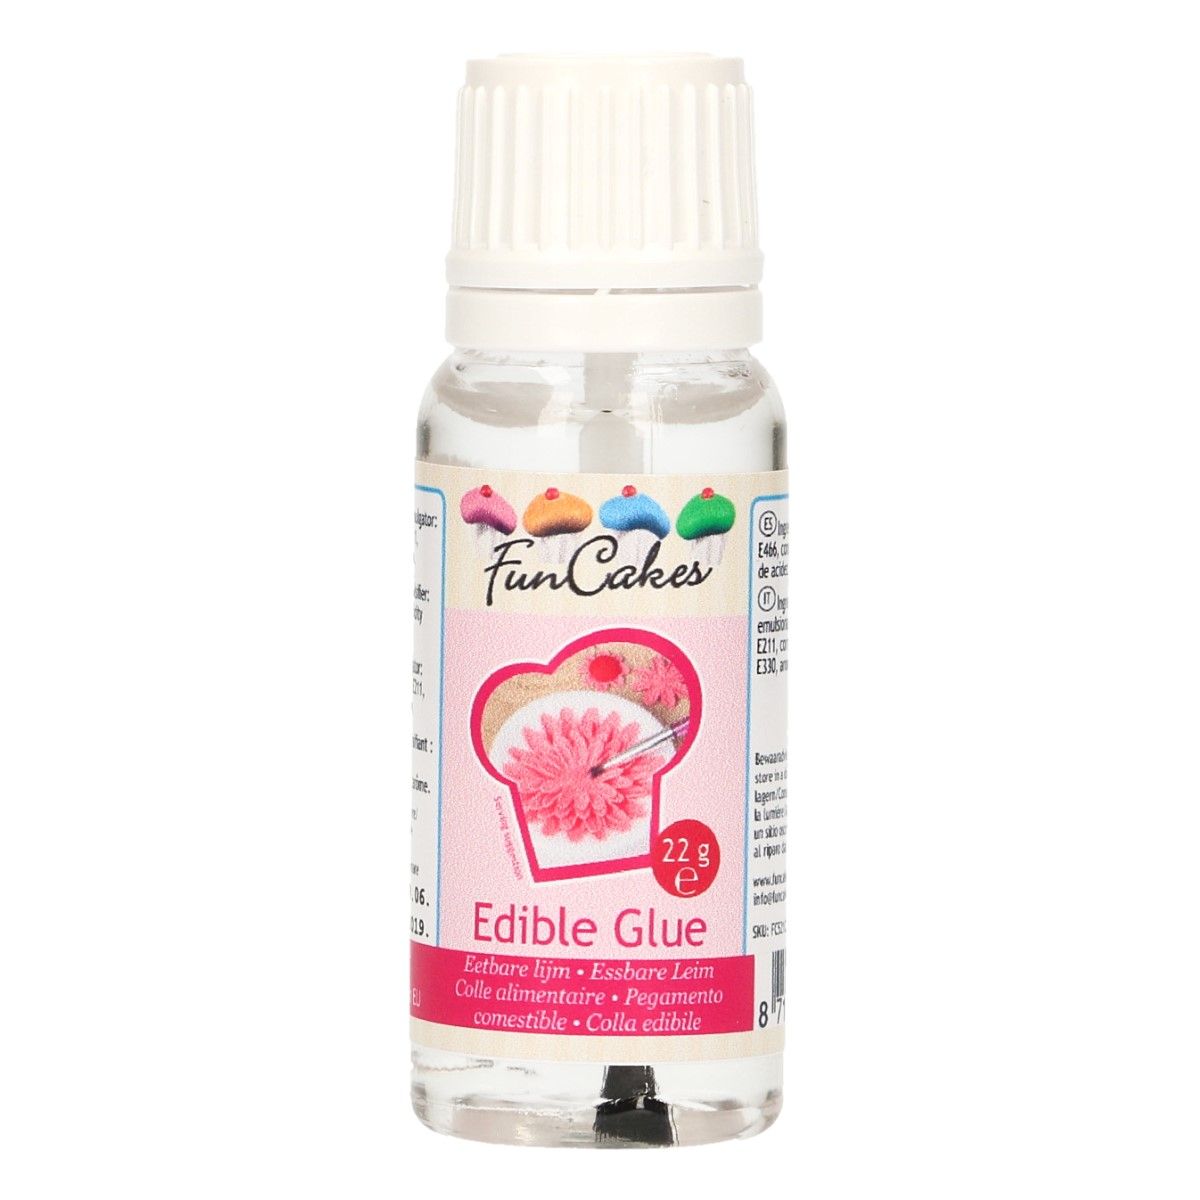 FunCakes Edible Glue - 22 g